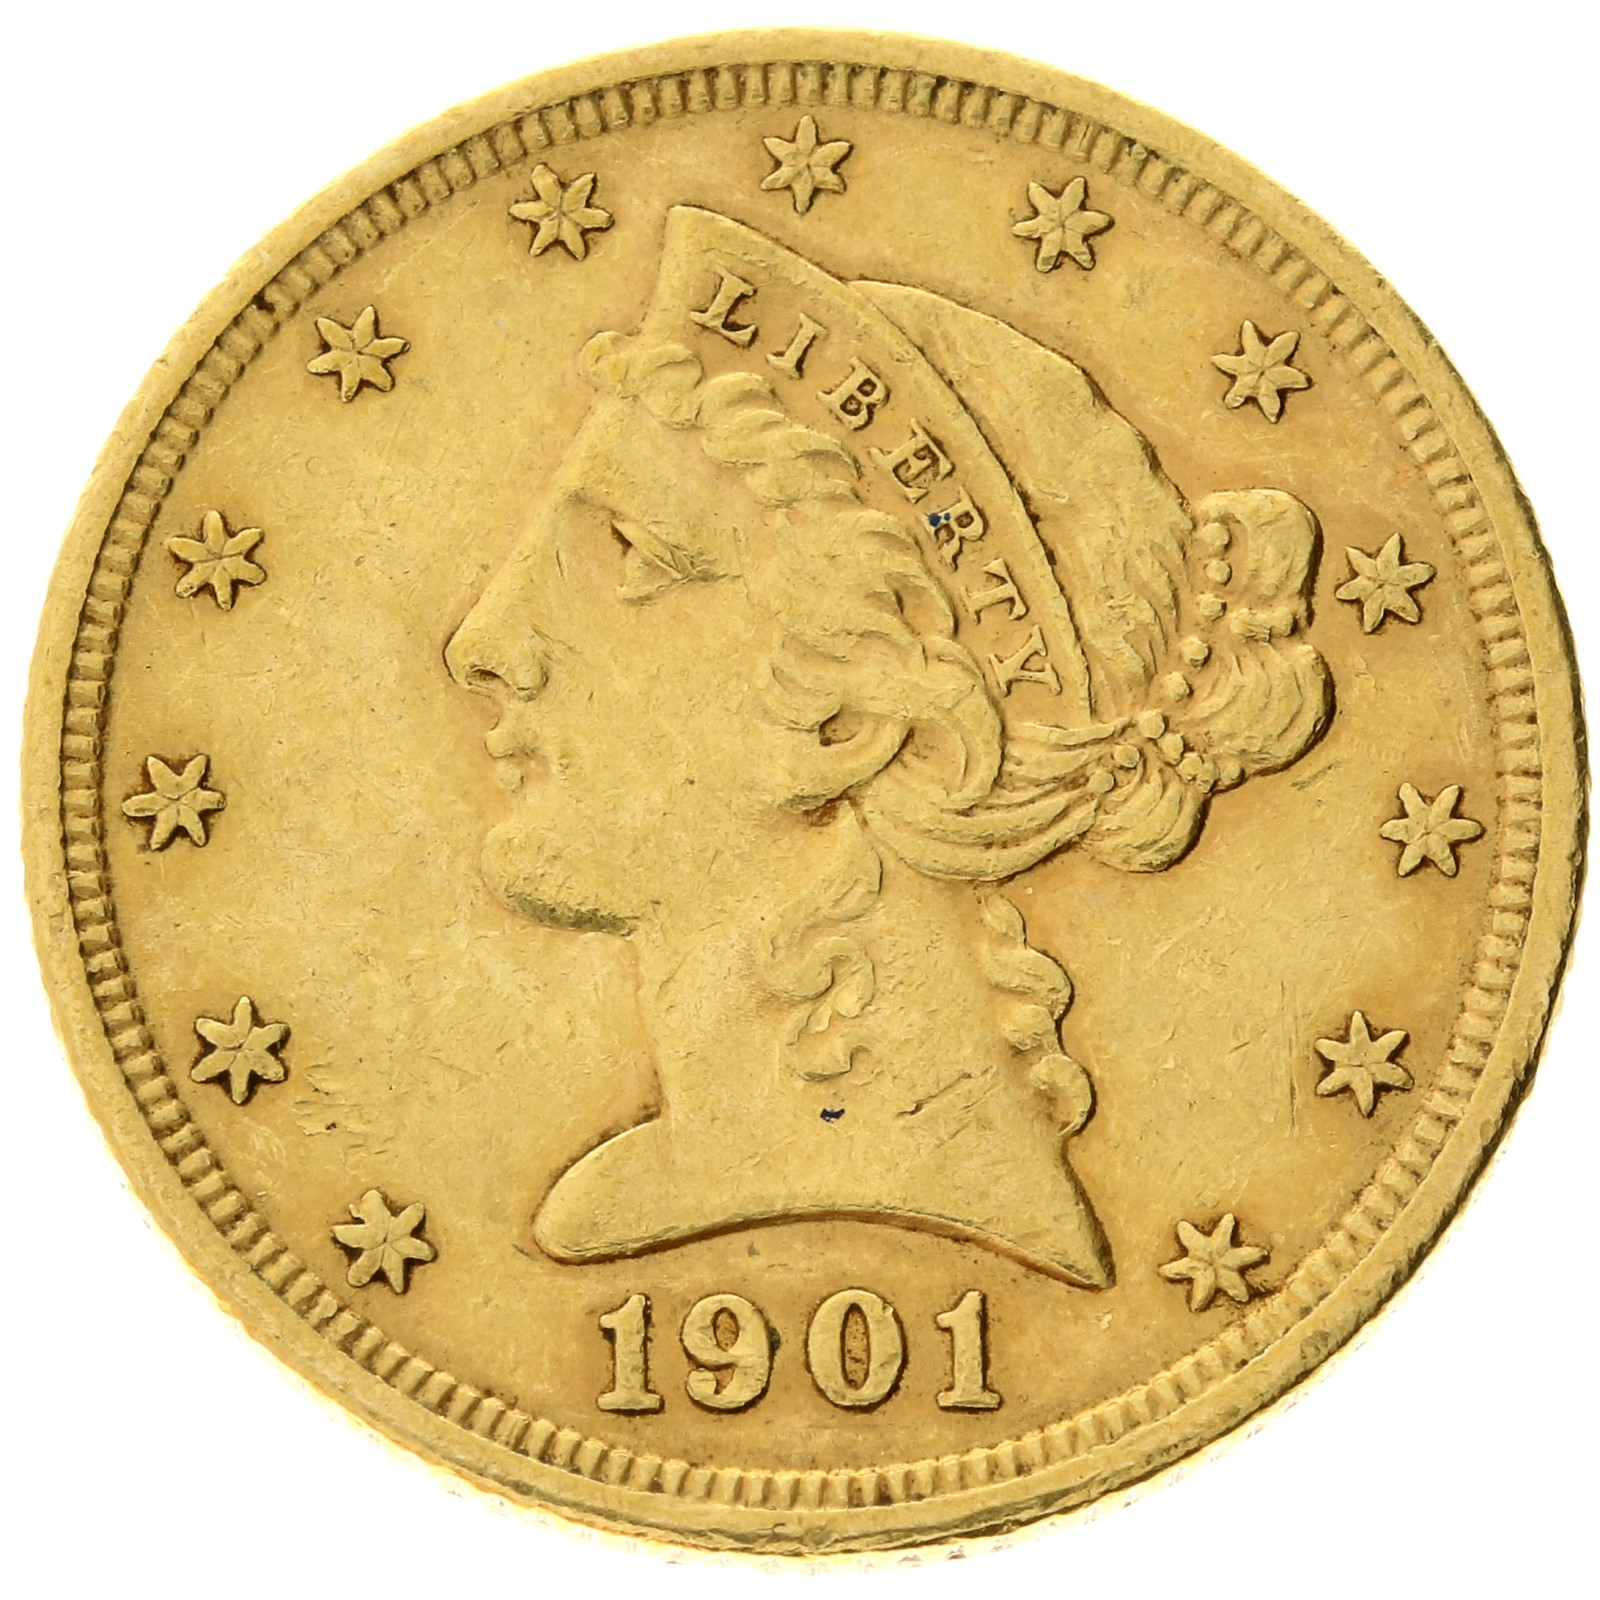 USA - 5 dollars - 1901 - S - Liberty / Coronet Head